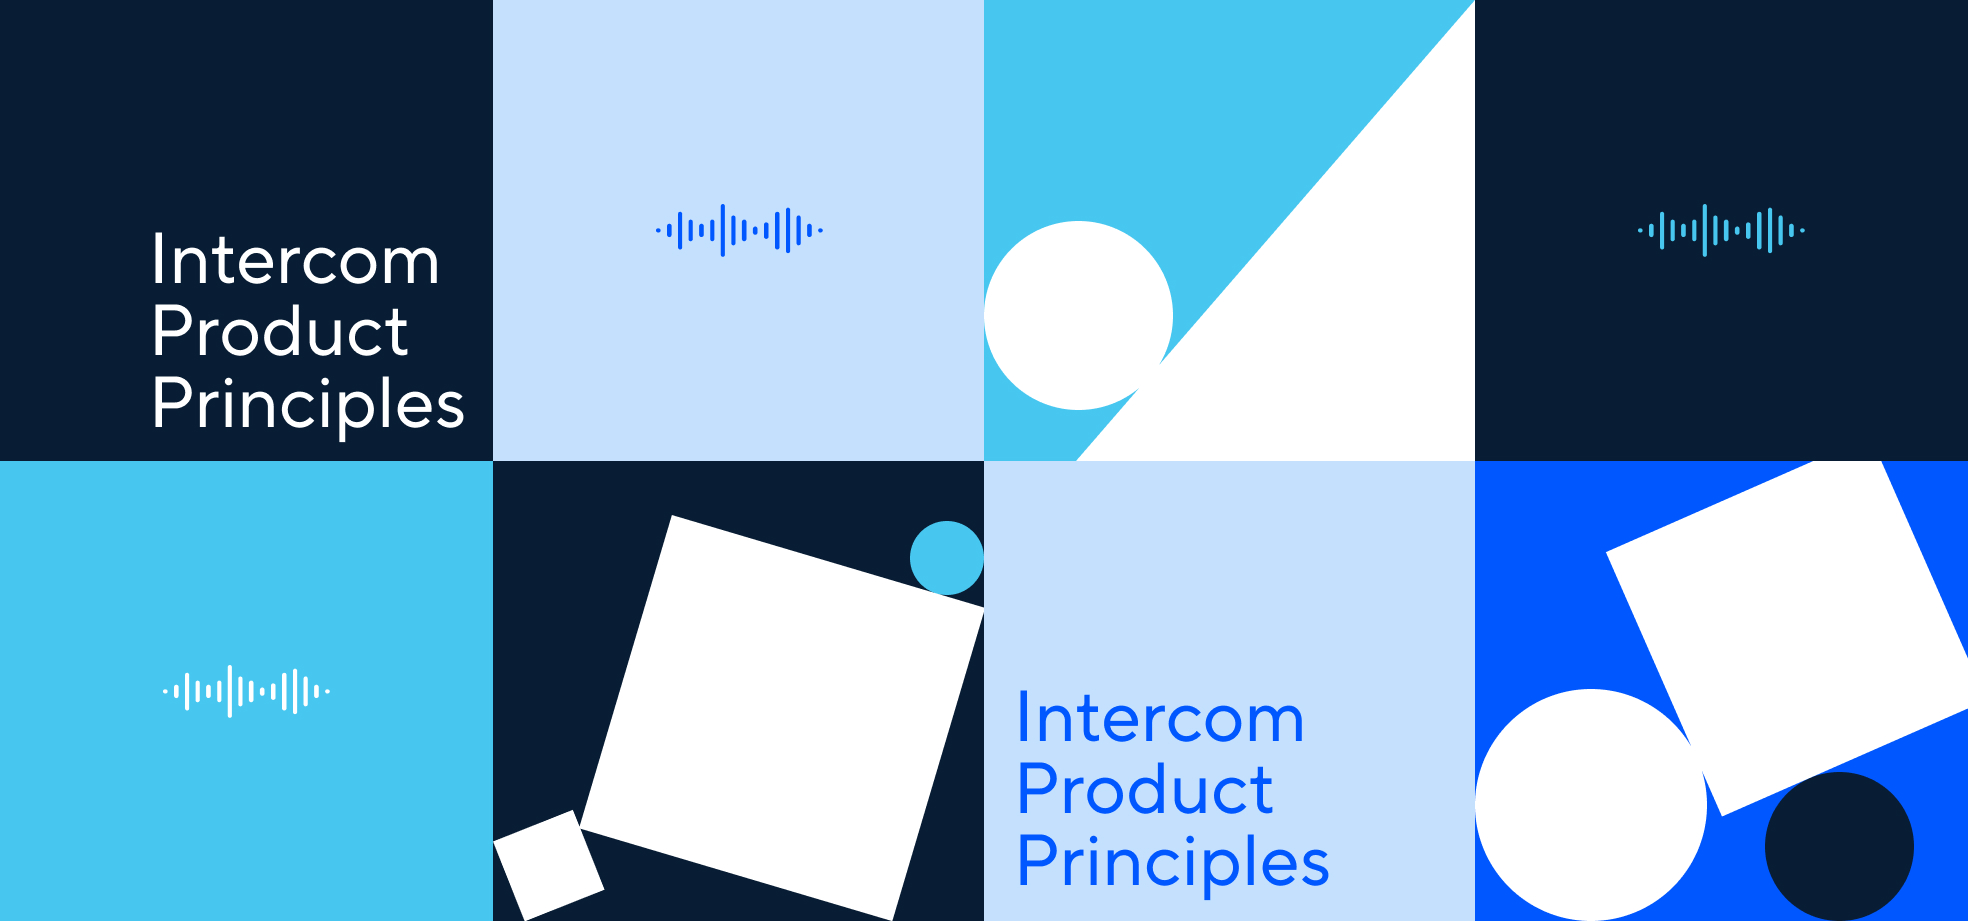 Intercom's product principles: Building solutions that fit